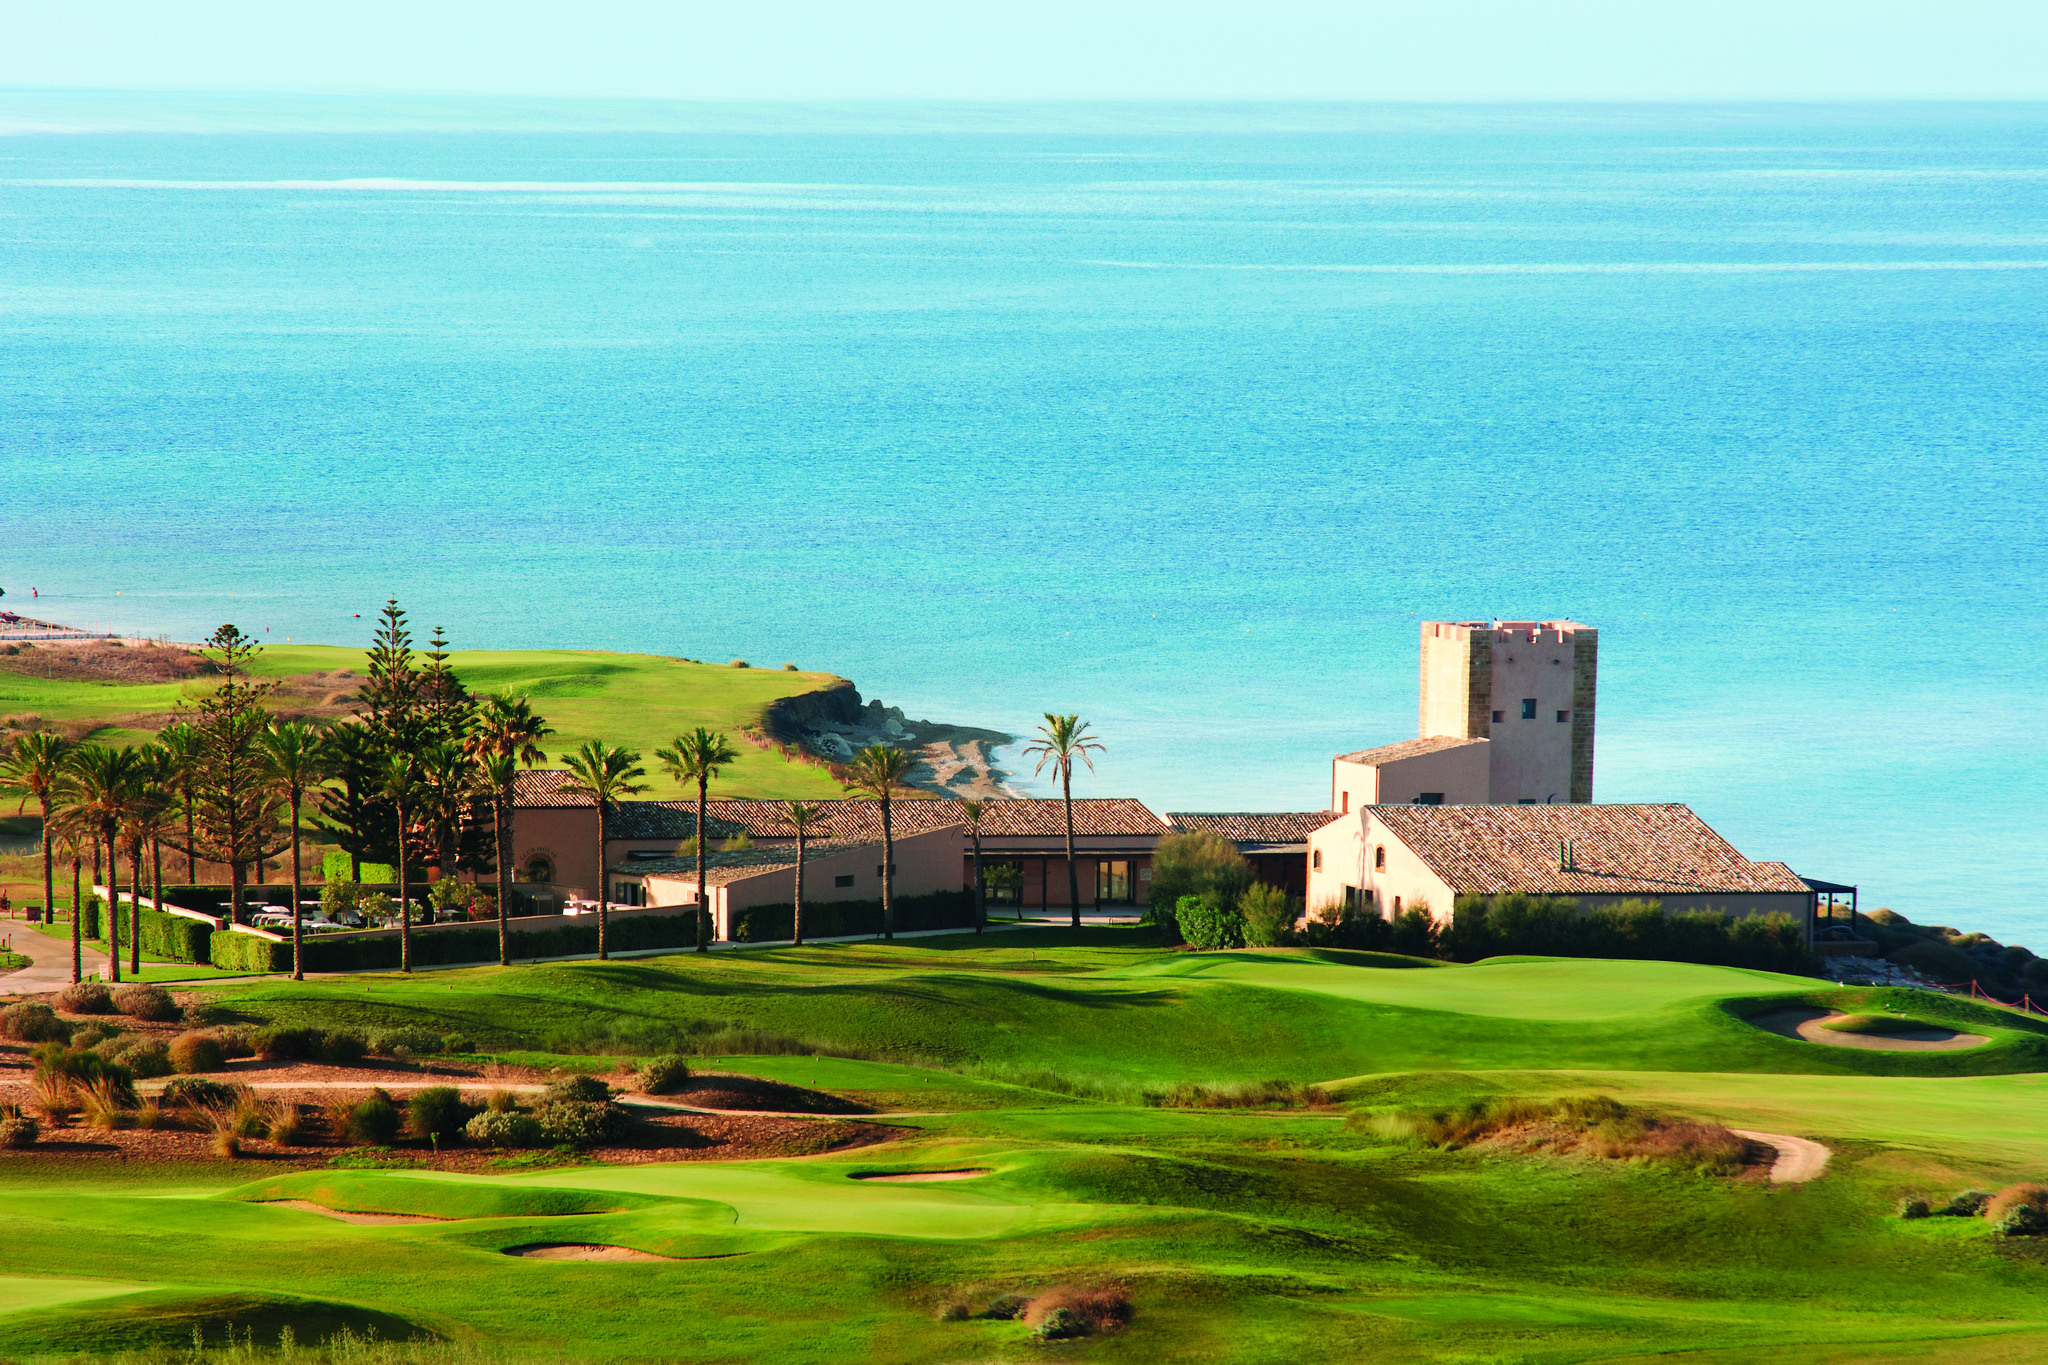 Verdura Golf Resort: Review